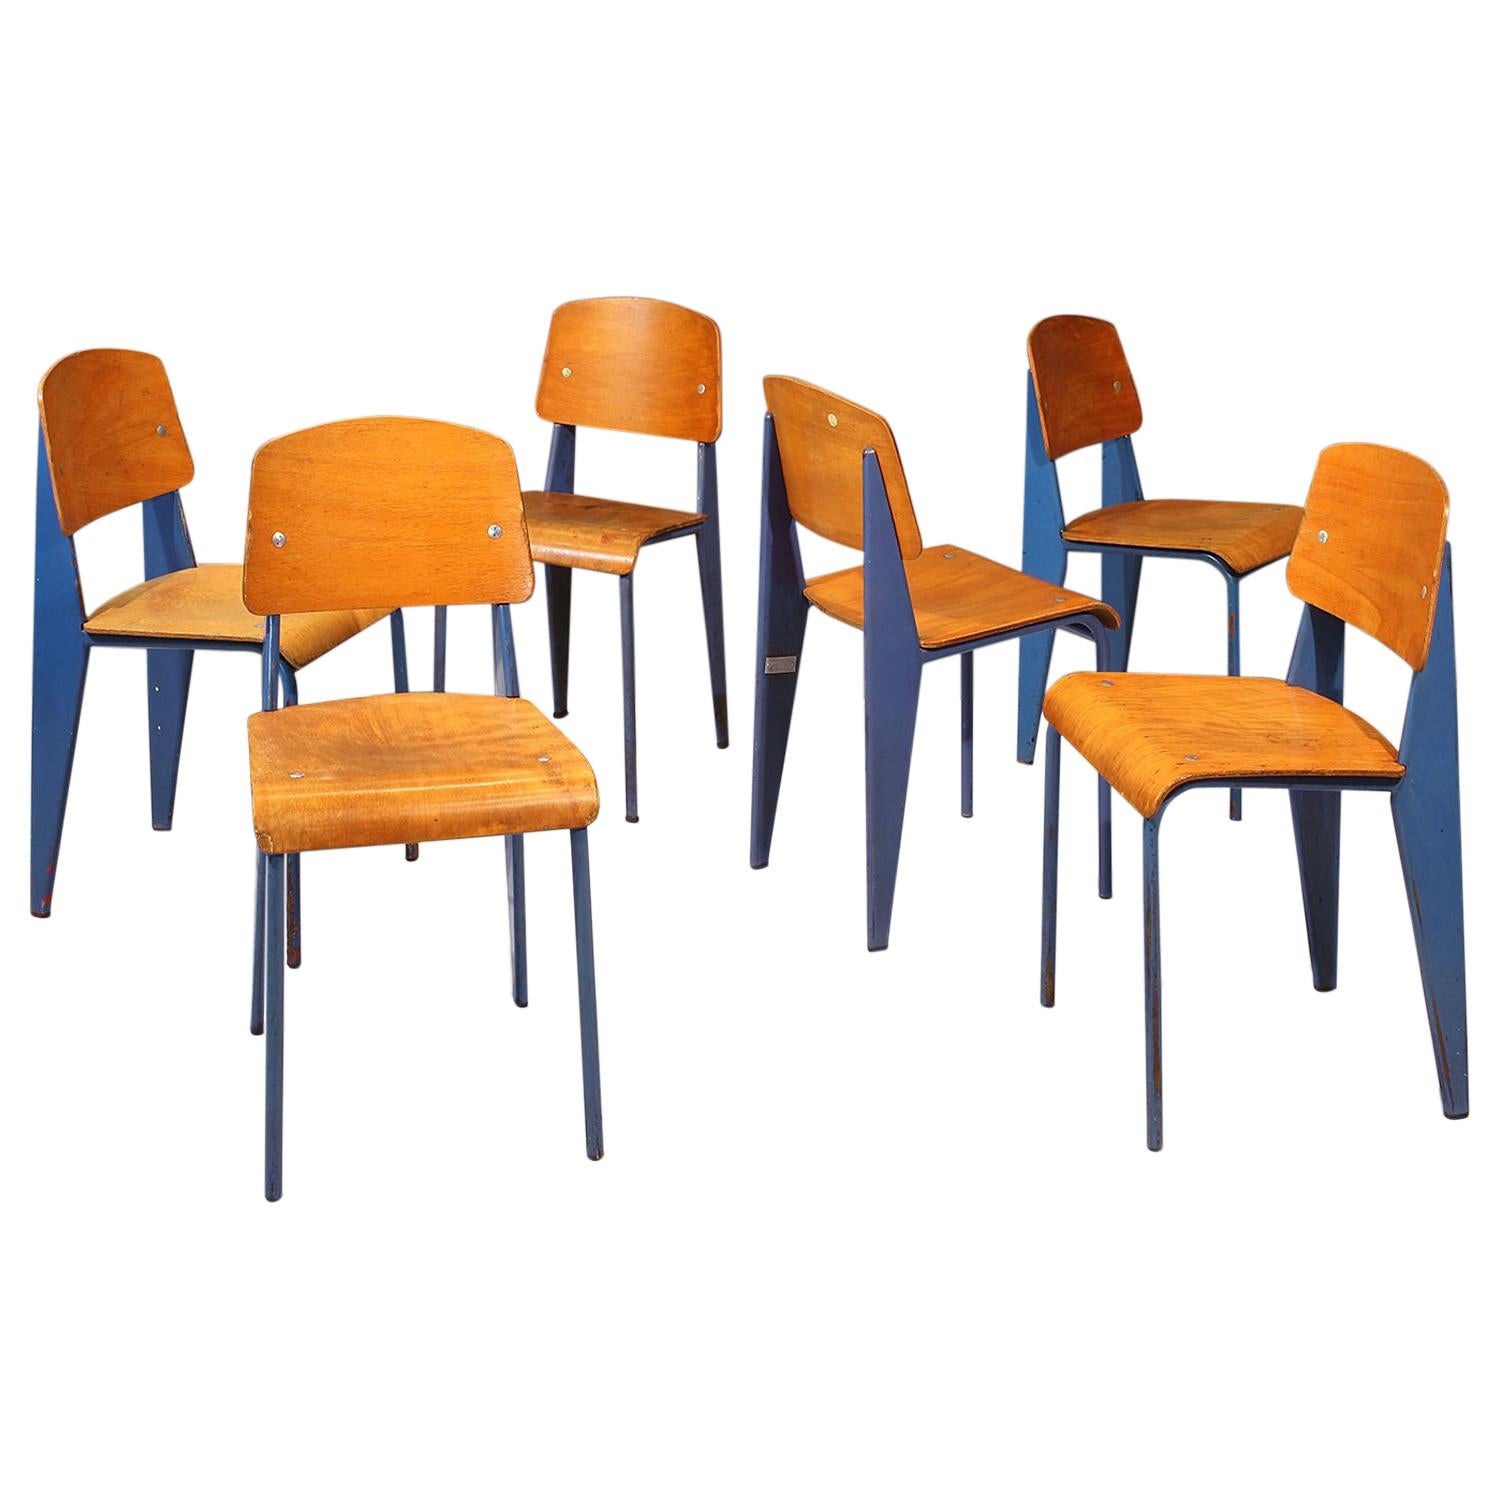 Rare Set of Six Jean Prouvé "Standard" Chairs, circa 1950s